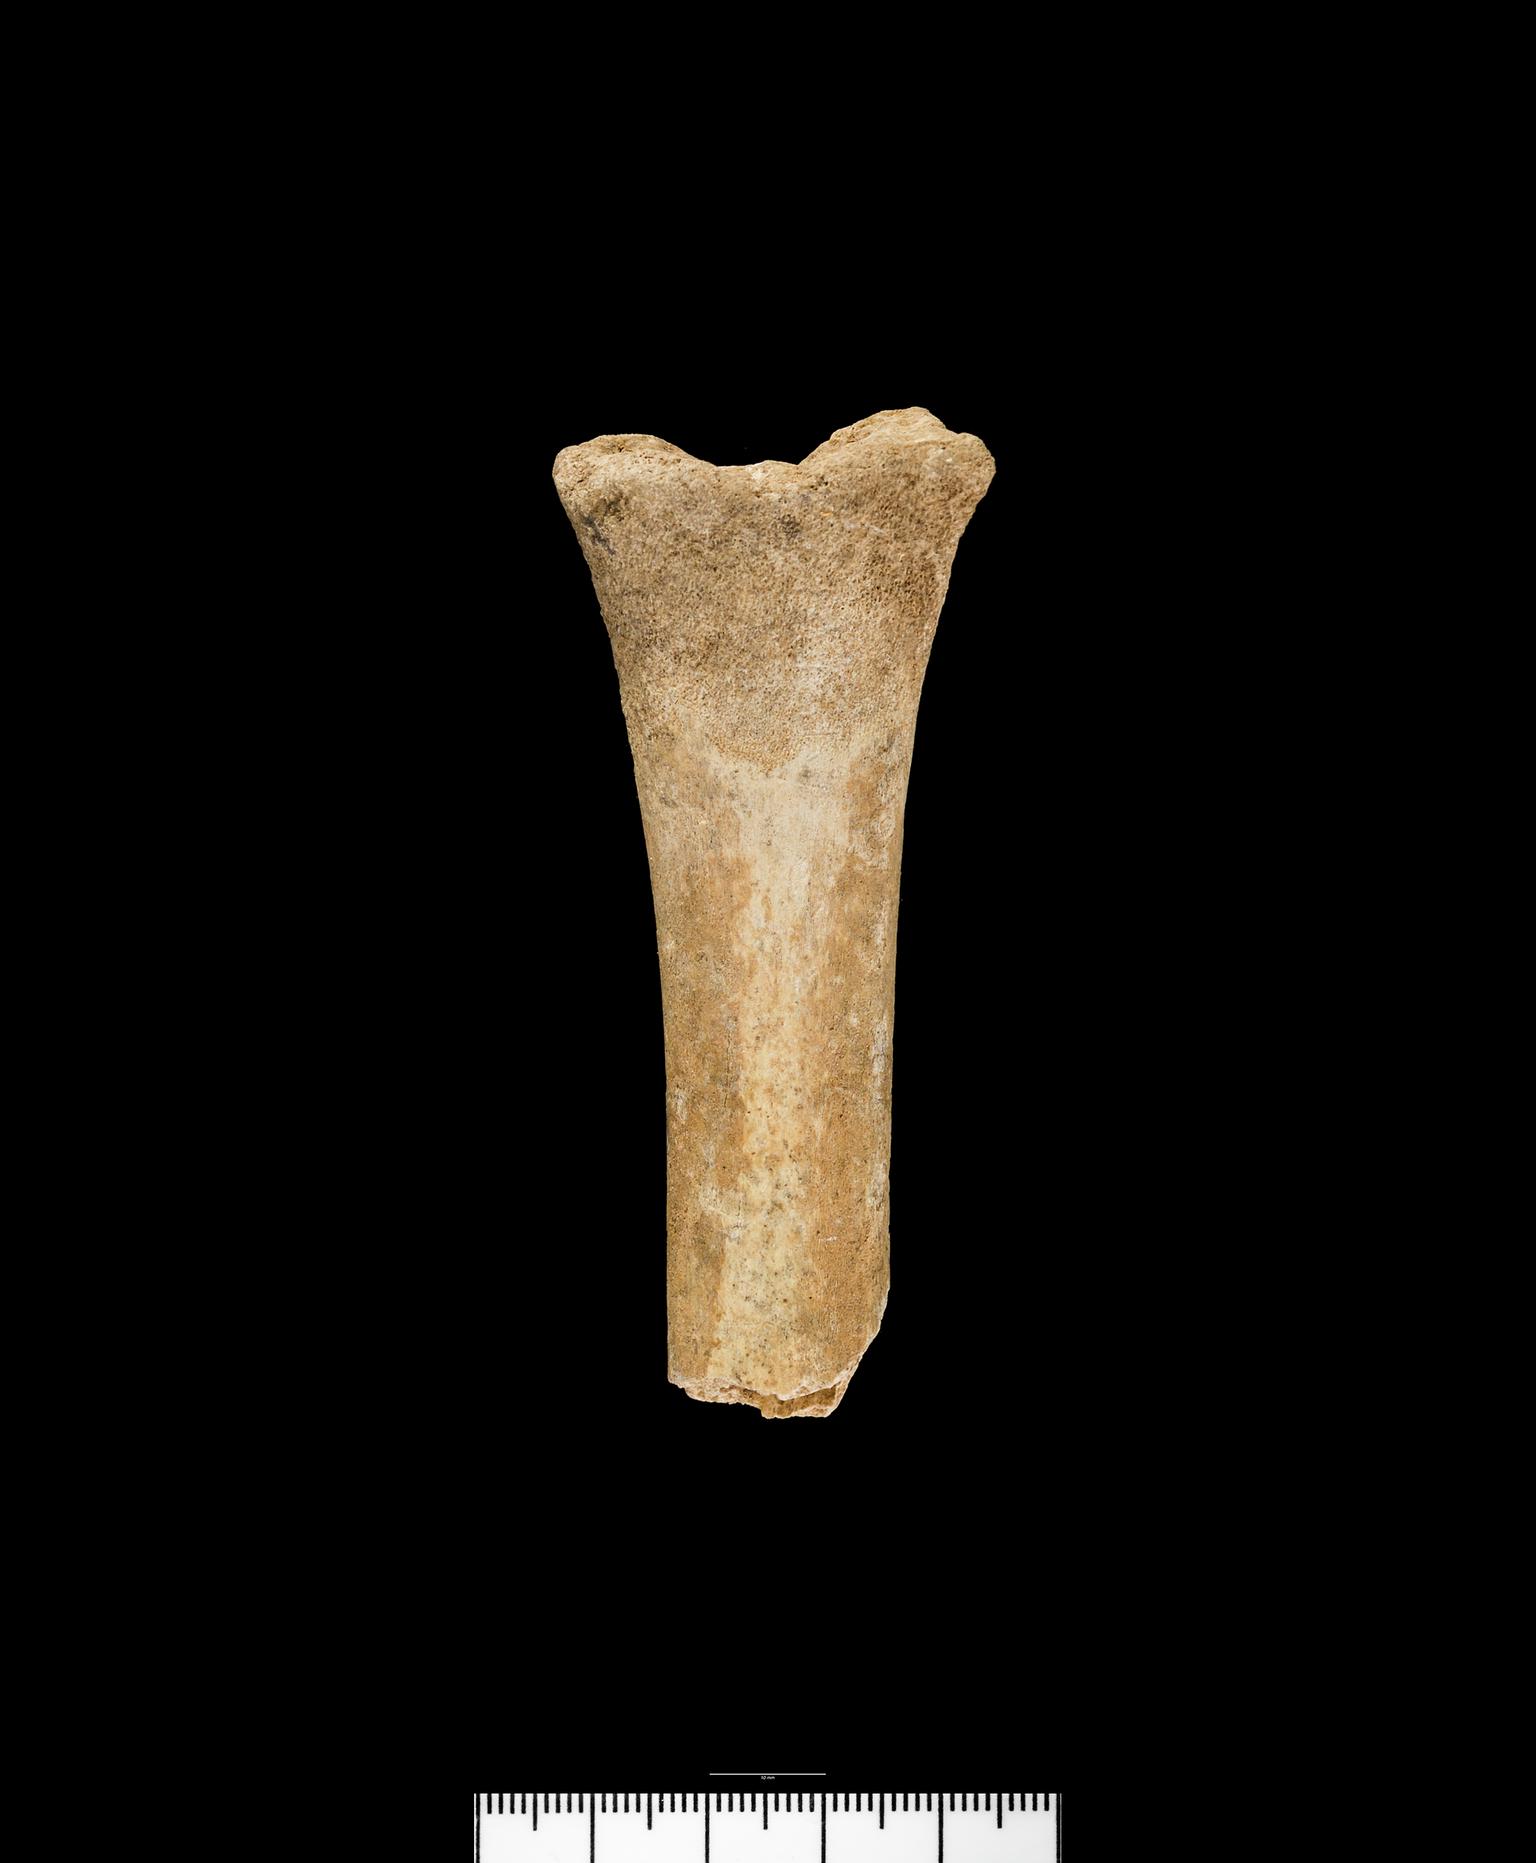 Holocene red deer bone